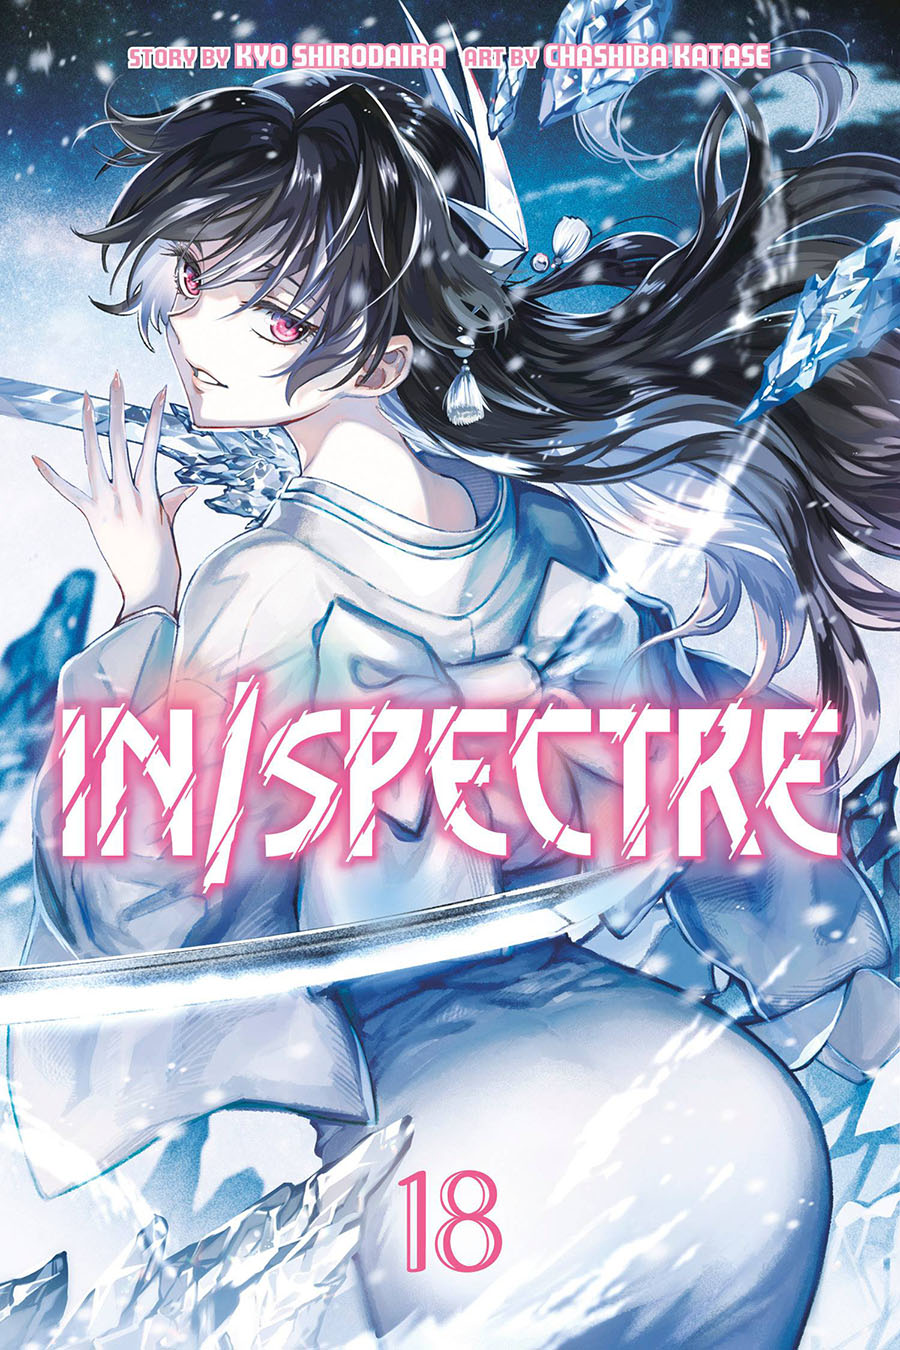 In/Spectre Vol 18 GN